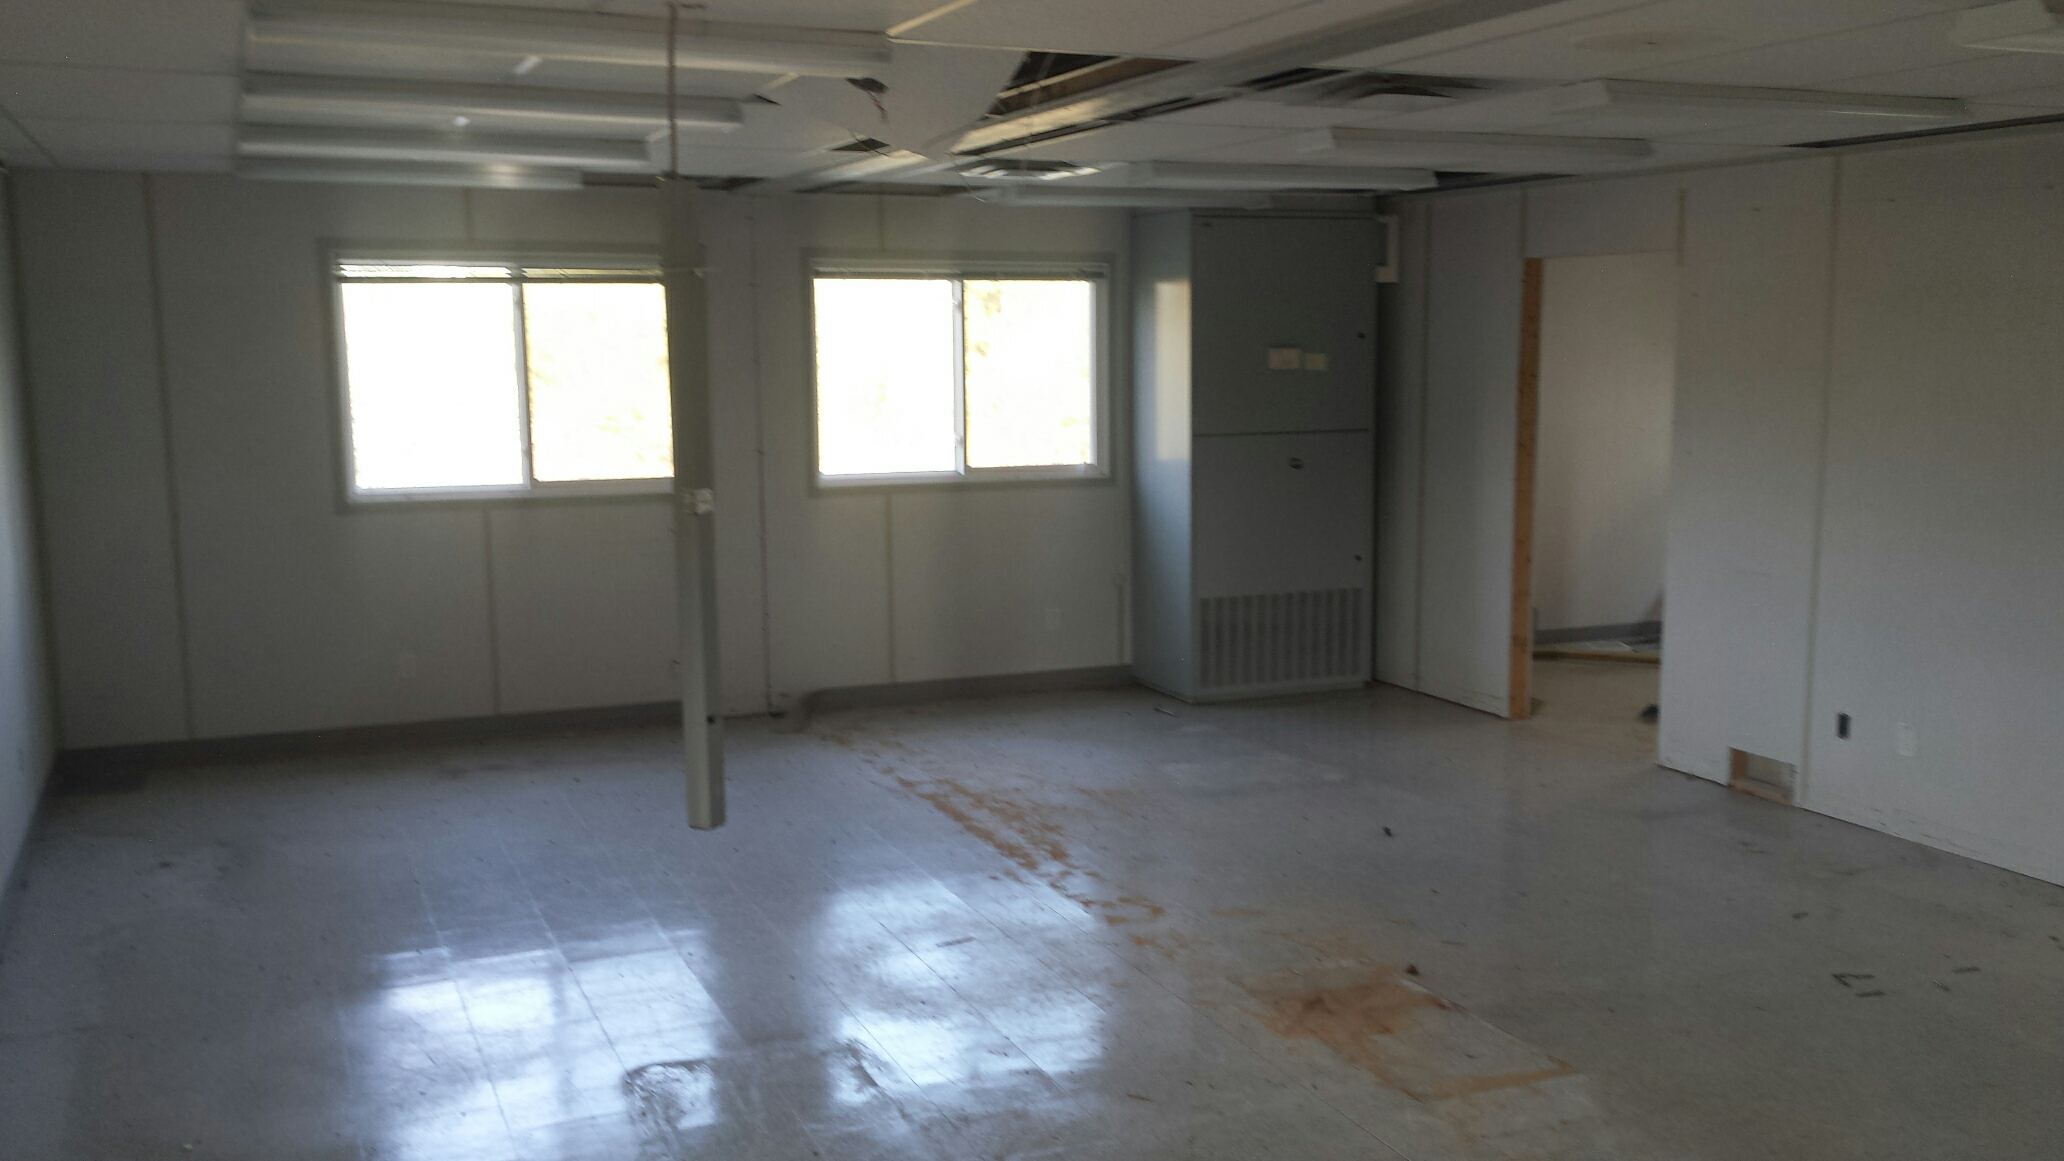 30x30 Portable Office, Classroom Building Inside